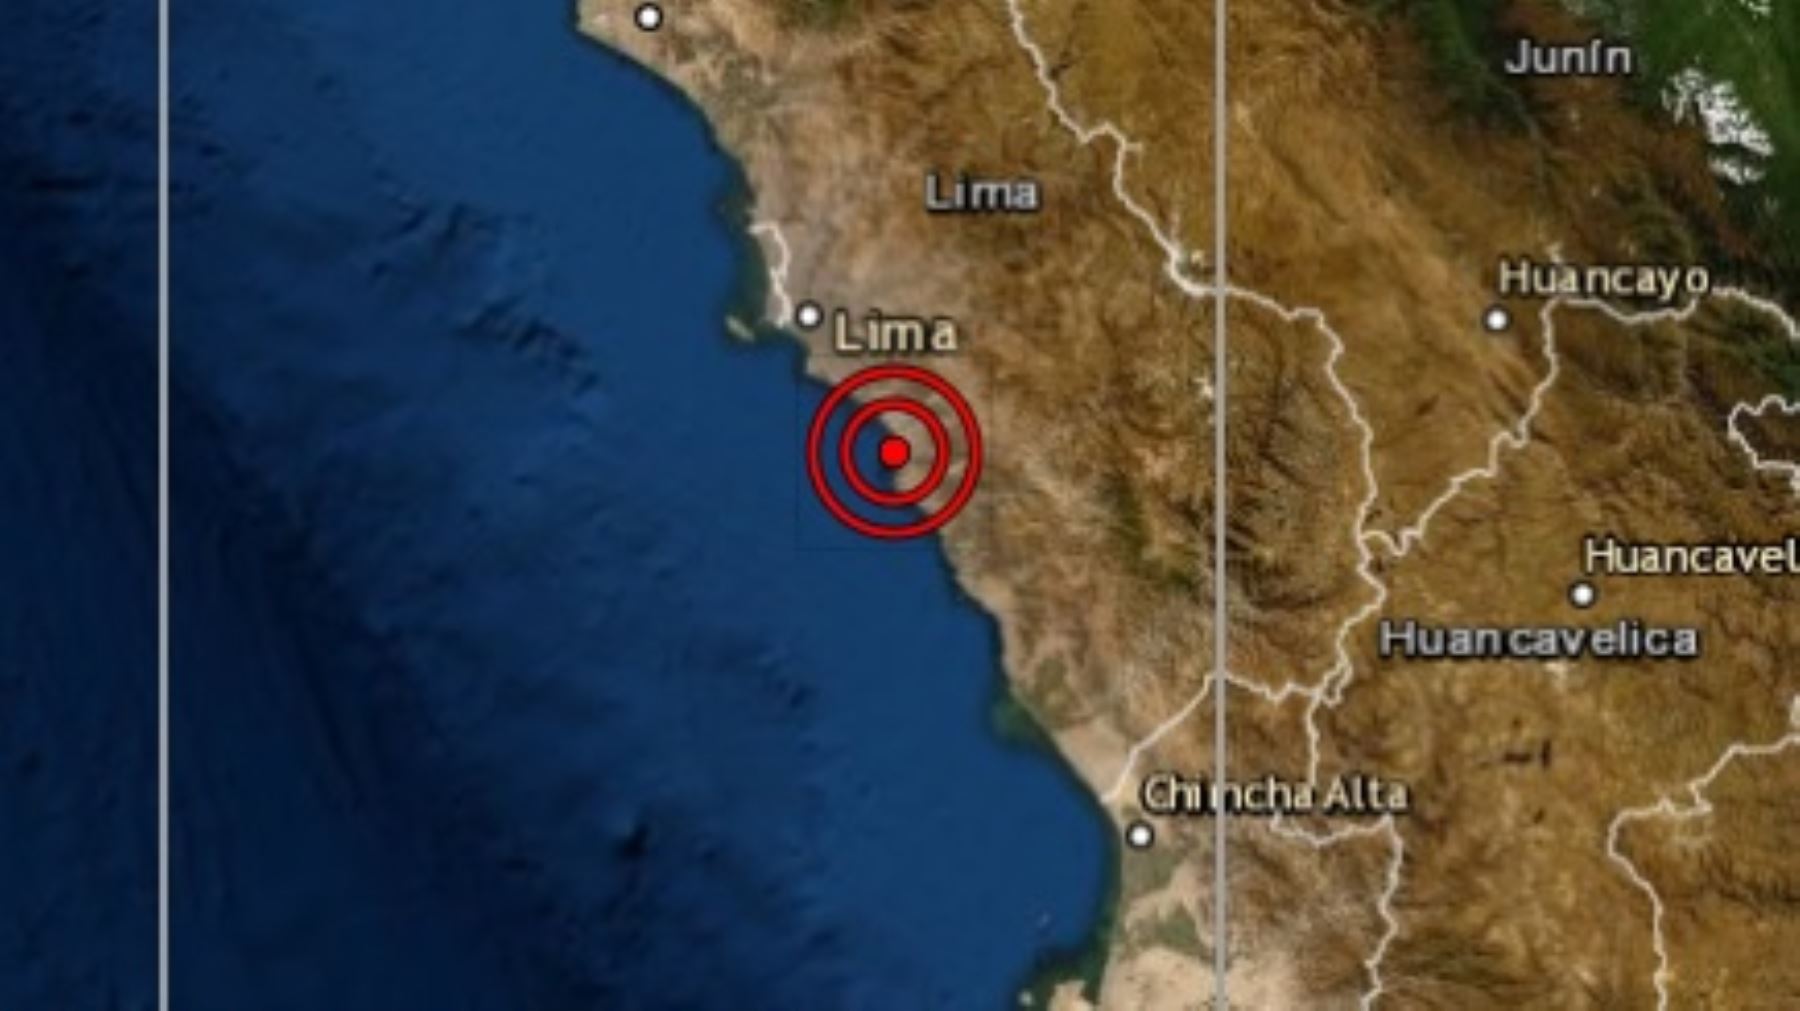 Un sismo de magnitud 3.7 se registró esta mañana en la provincia de Cañete, departamento de Lima, reportó el Instituto Geofísico del Perú (IGP).